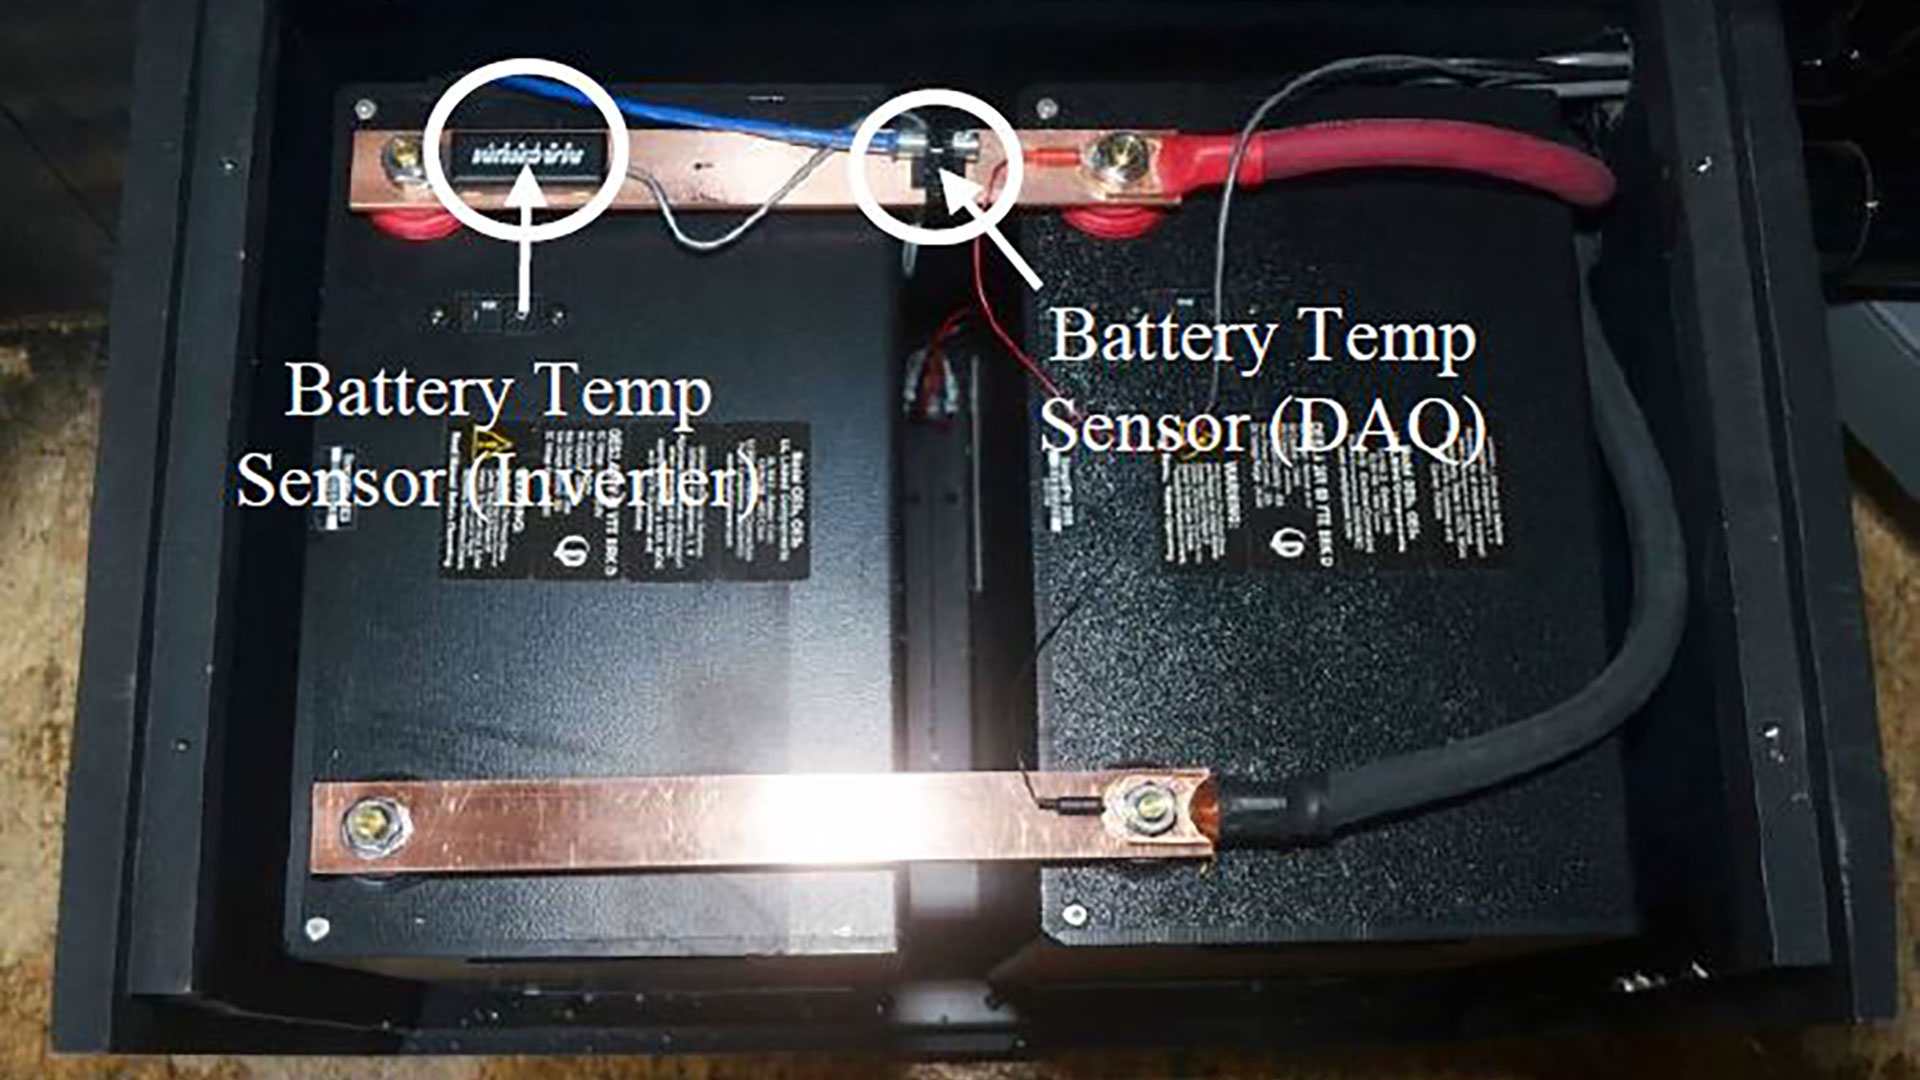 https://simpliphipower.com/wp-content/uploads/2019/03/dartmouth-college-on-battery-temperature-sensor-inverter-daq-connections-simpliphi-power-1920-1080.jpg